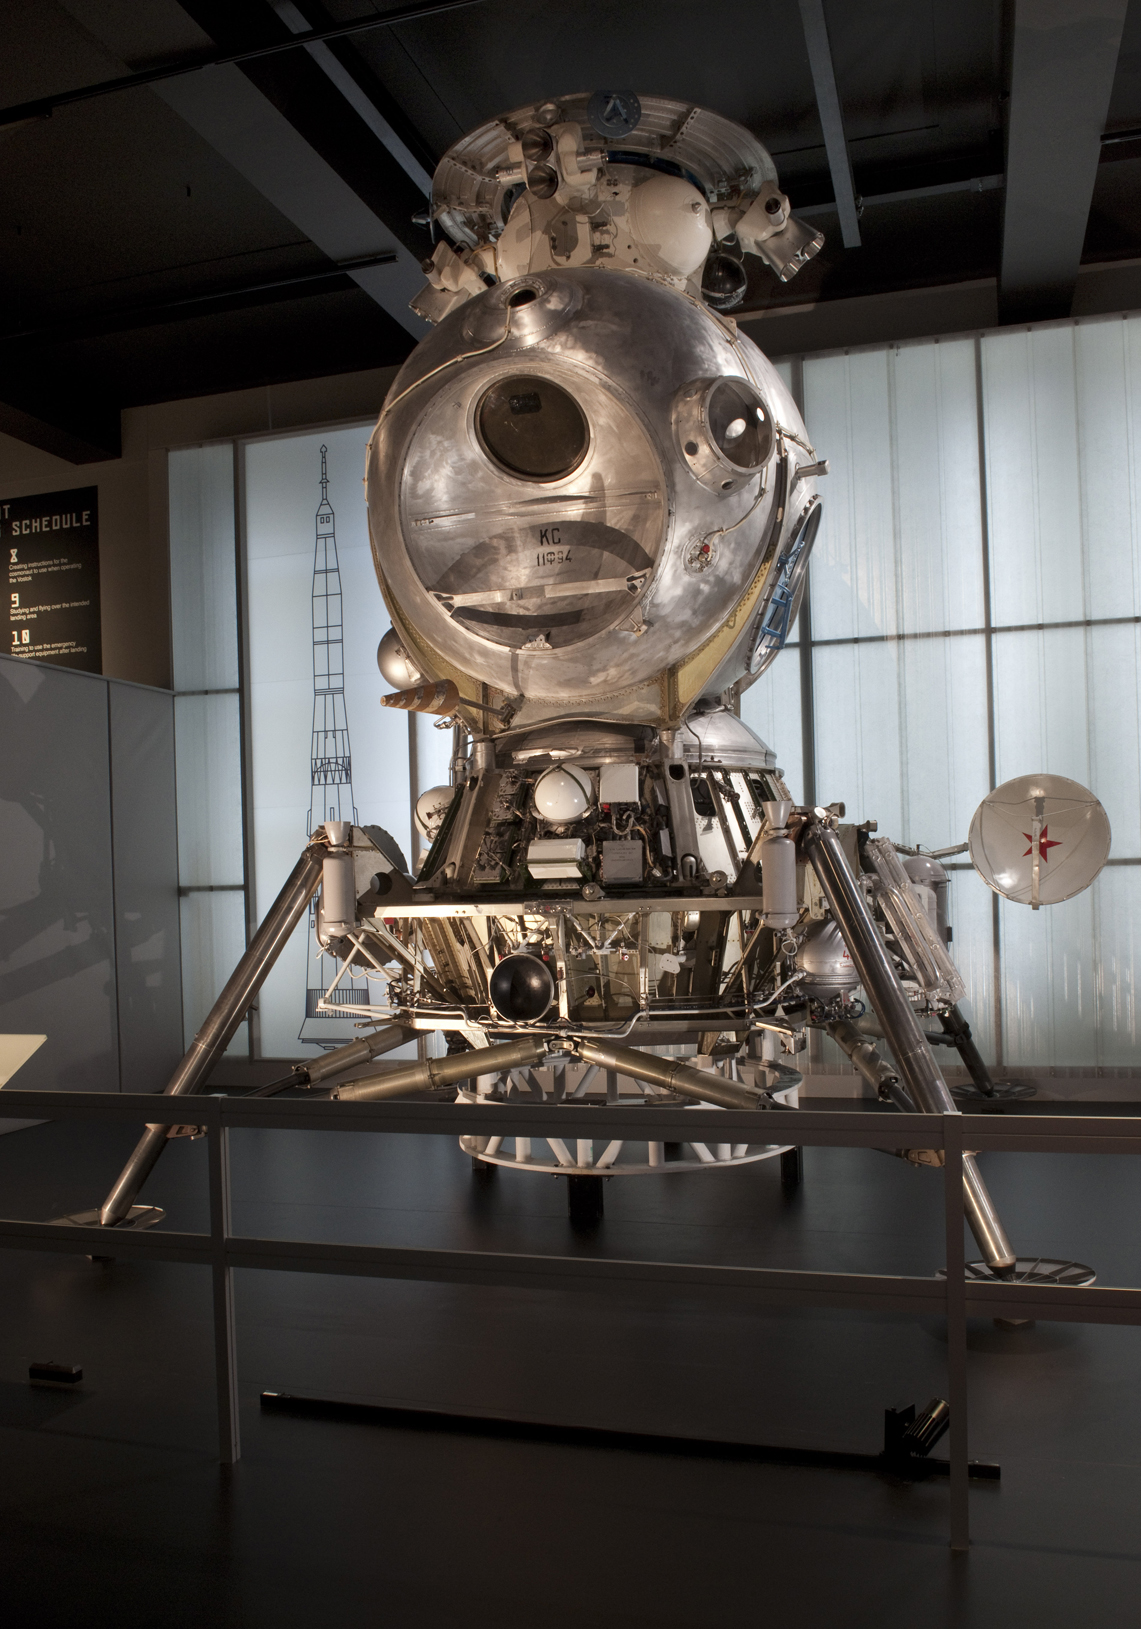 The monumental LK-3 lunar lander (engineering model, 1969) in the Cosmonauts exhibition. Credit: Science Museum